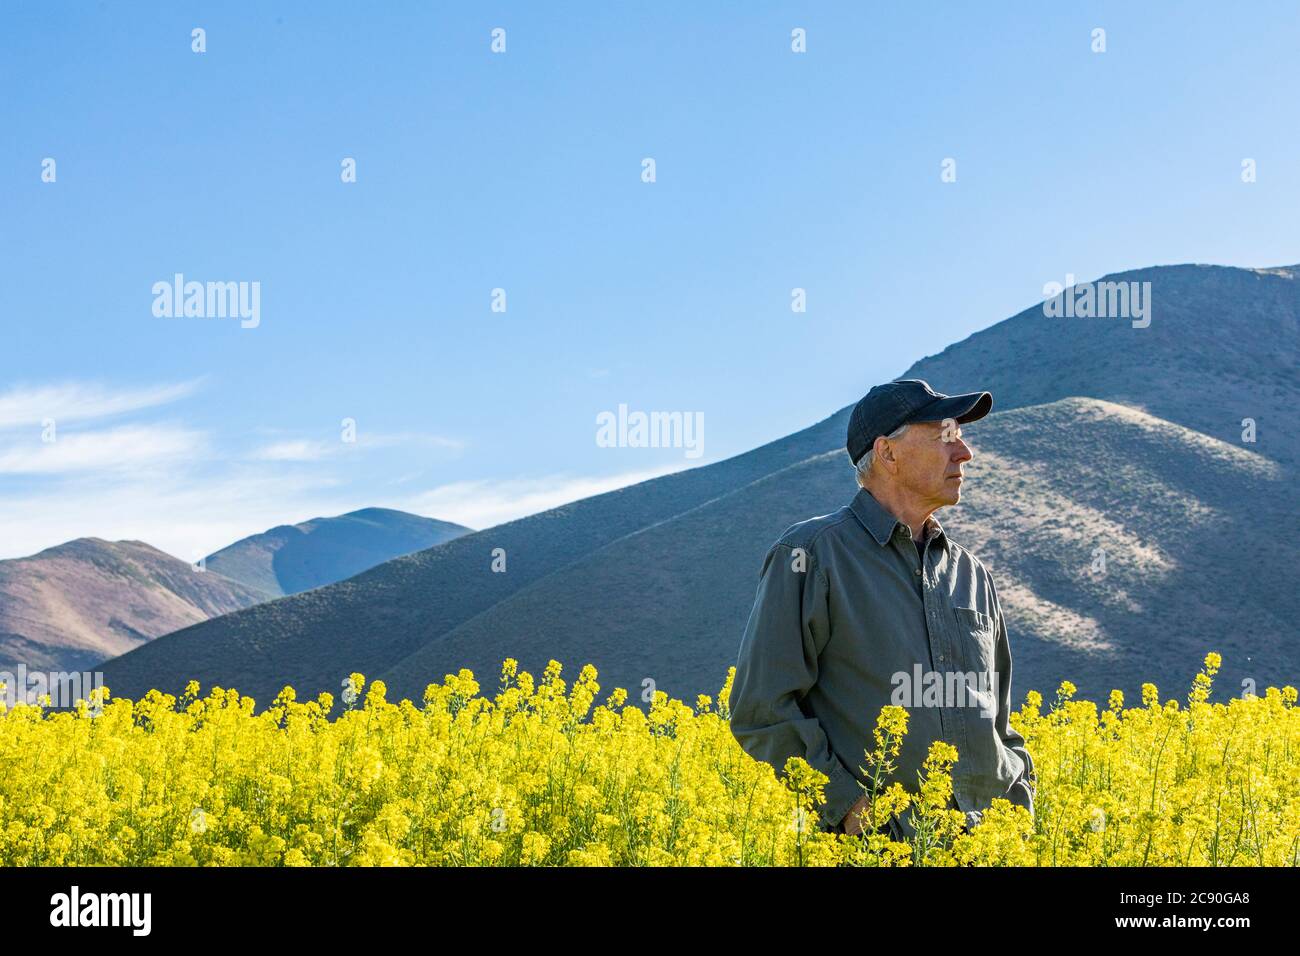 USA, Idaho, Sun Valley, Farmer standing in mustard field Stock Photo